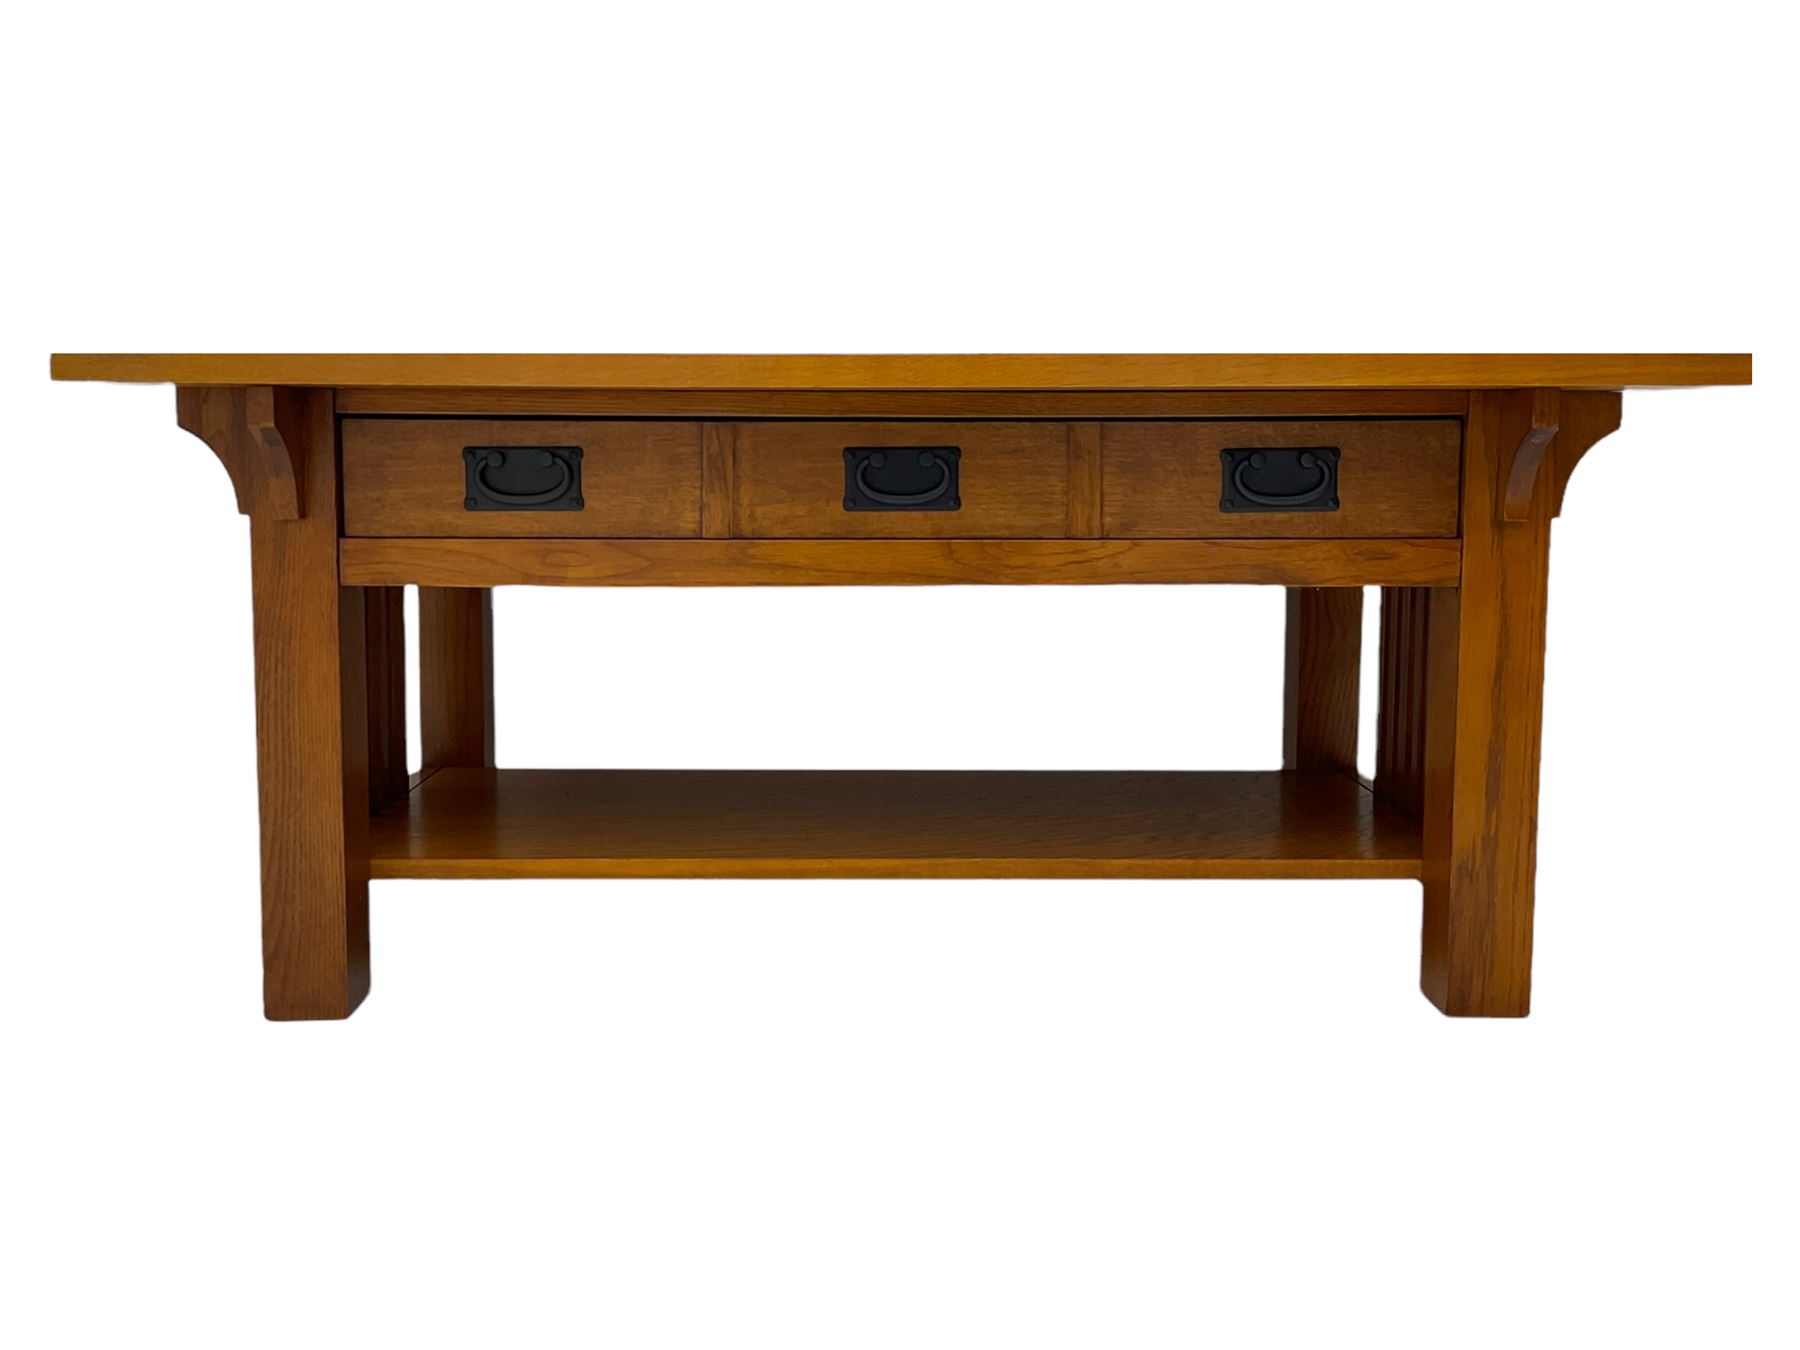 Light oak rectangular coffee table - Image 5 of 5